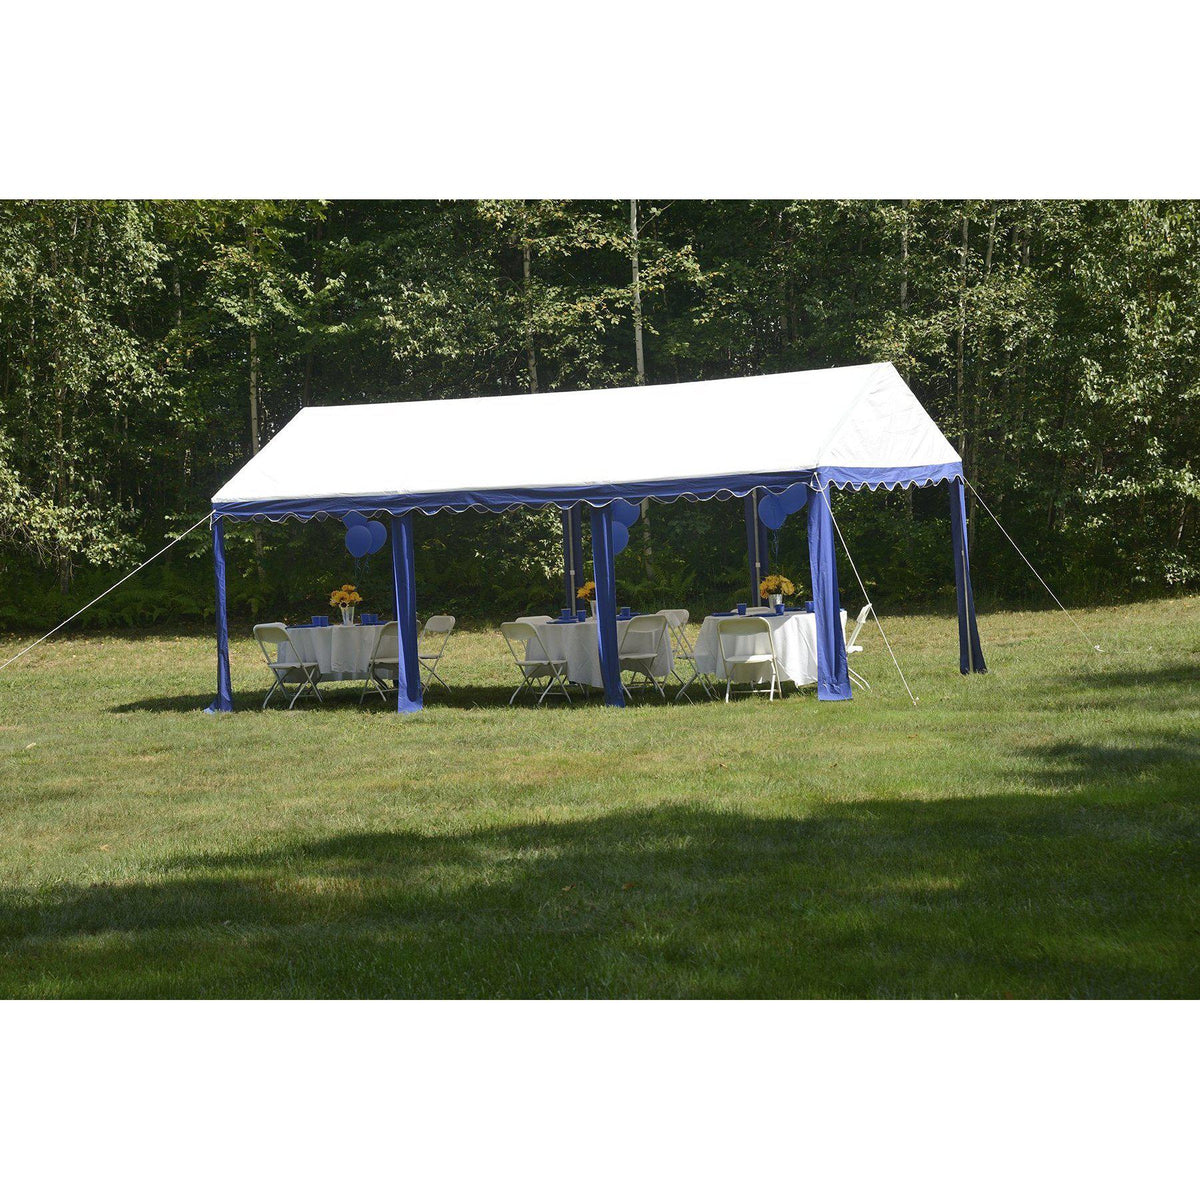 ShelterLogic Party Tent, Blue/White, 10 x 20 ft.